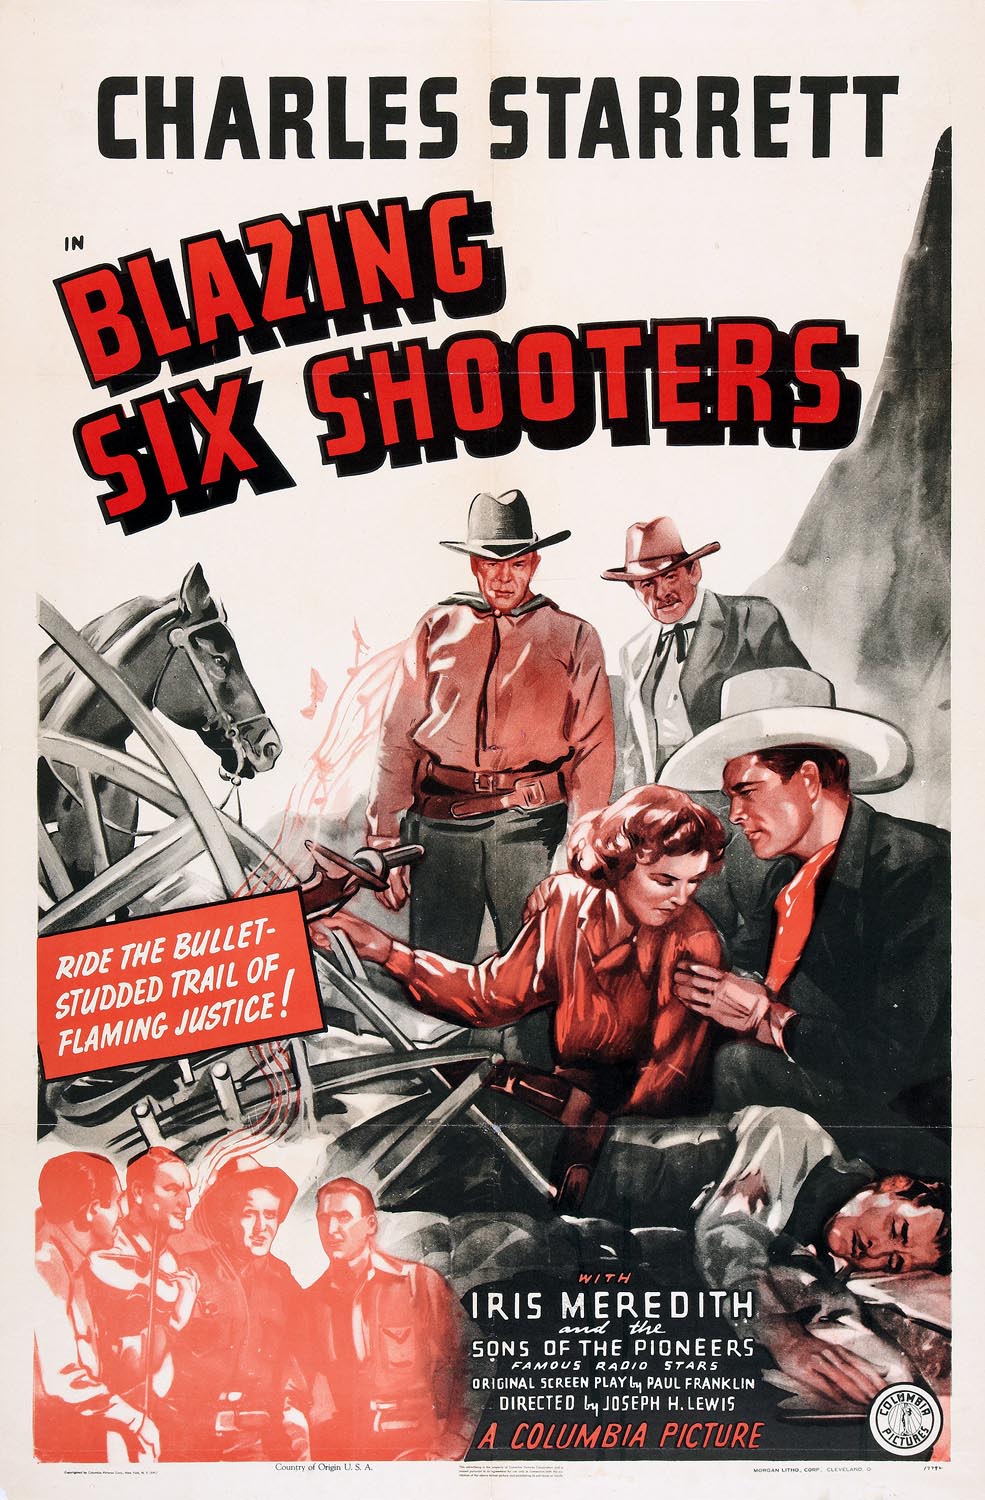 BLAZING SIX SHOOTERS